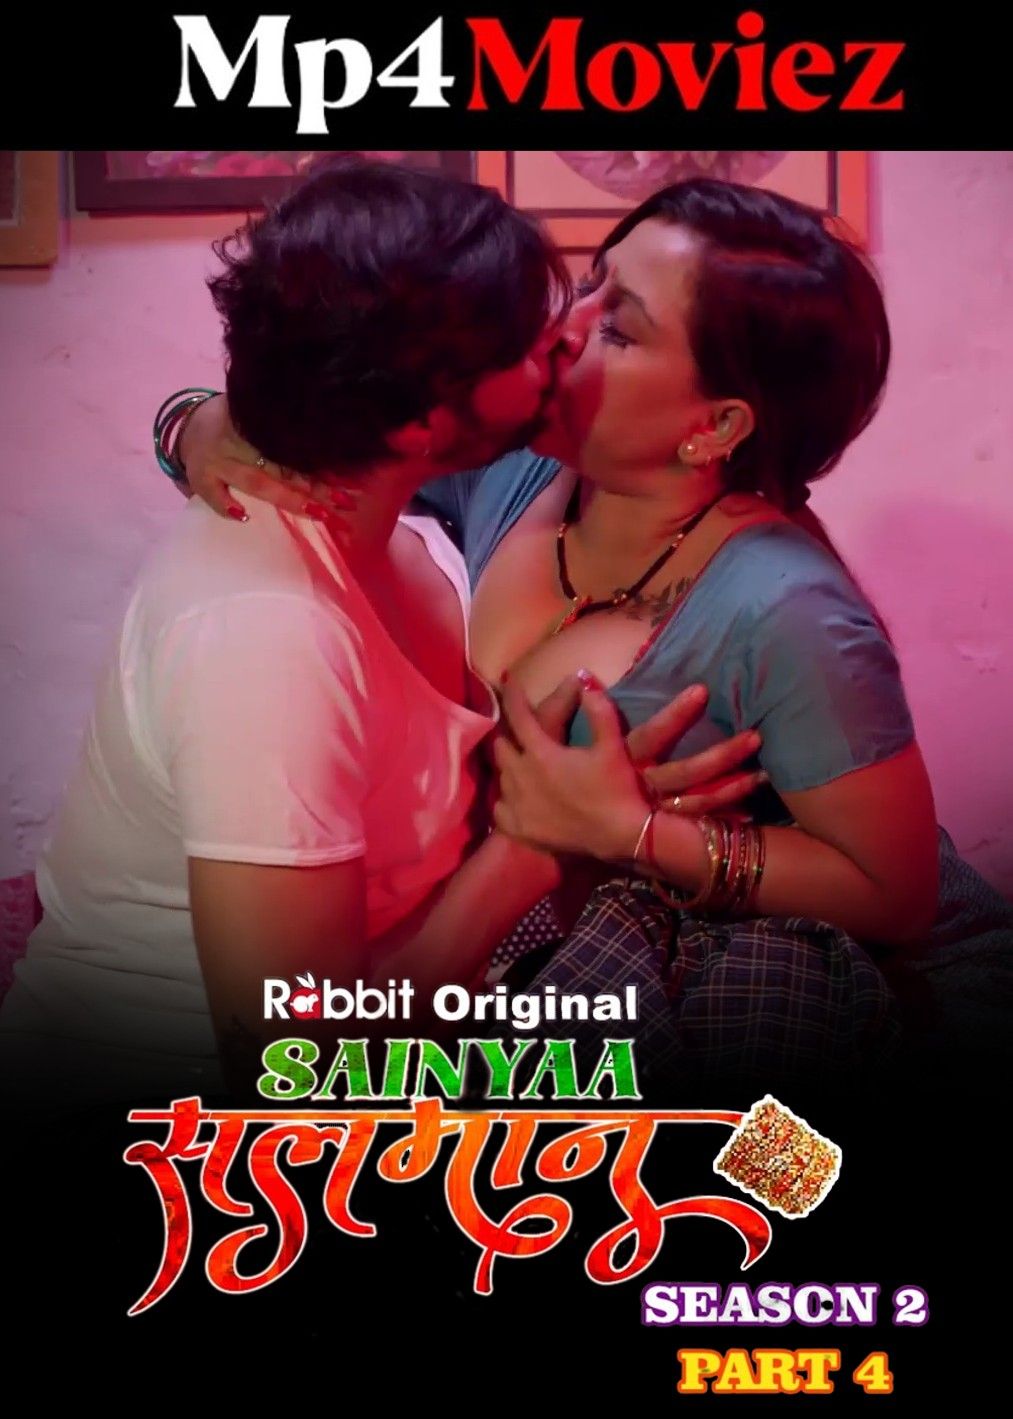 Sainyaa Salman (2023) S02 Part 4 Hindi RabbitMovies Web Series download full movie